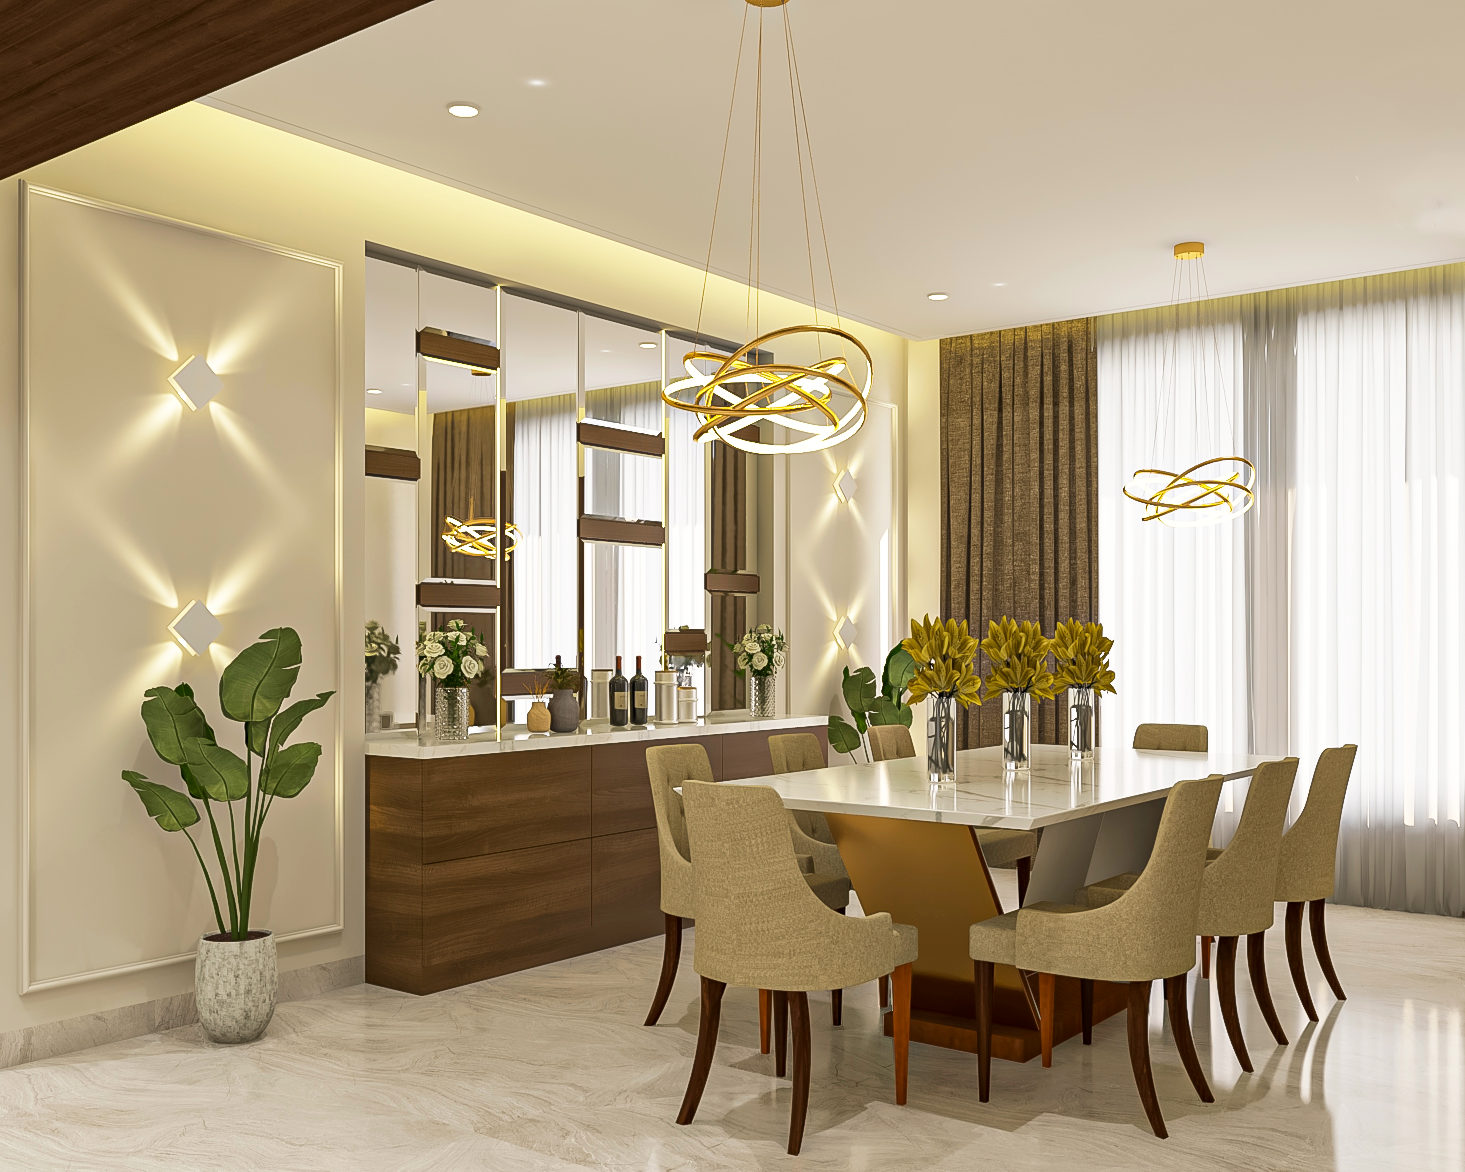 Modern Dining Room Design With Crockery Unit